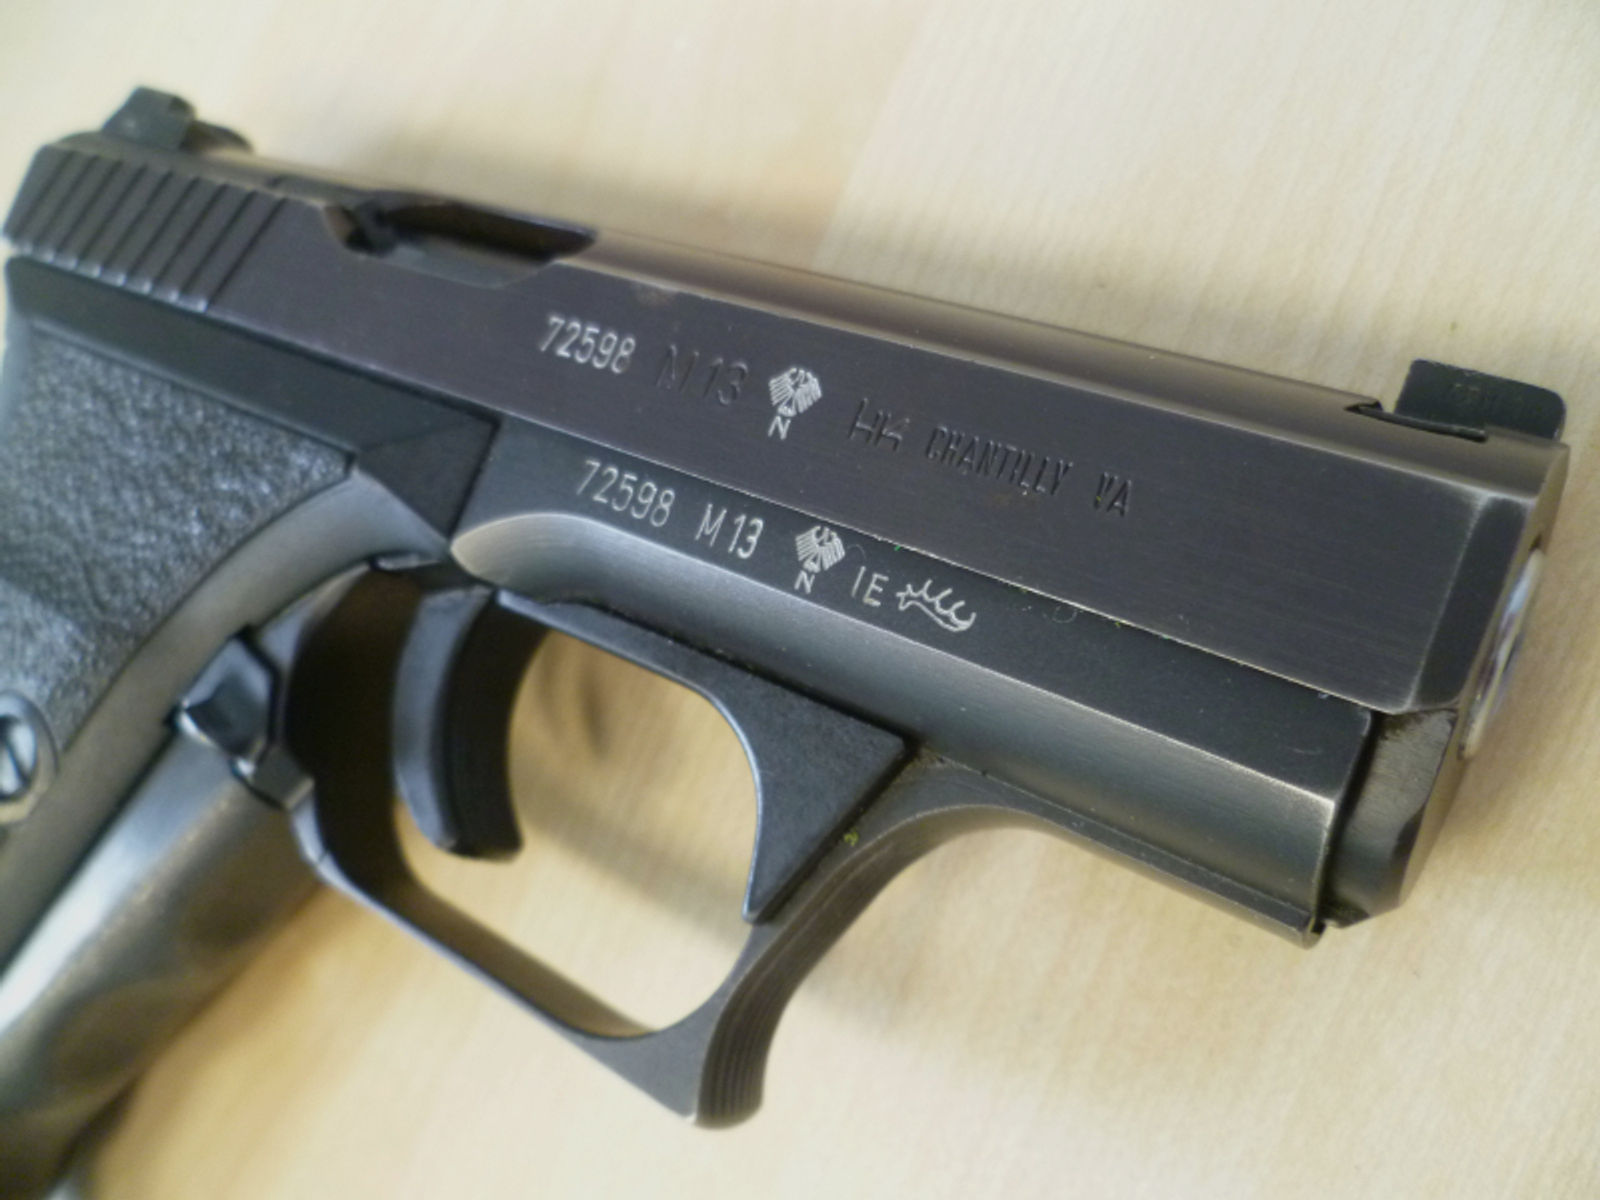 Pistole Heckler & Koch P7 M13 9mm Luger